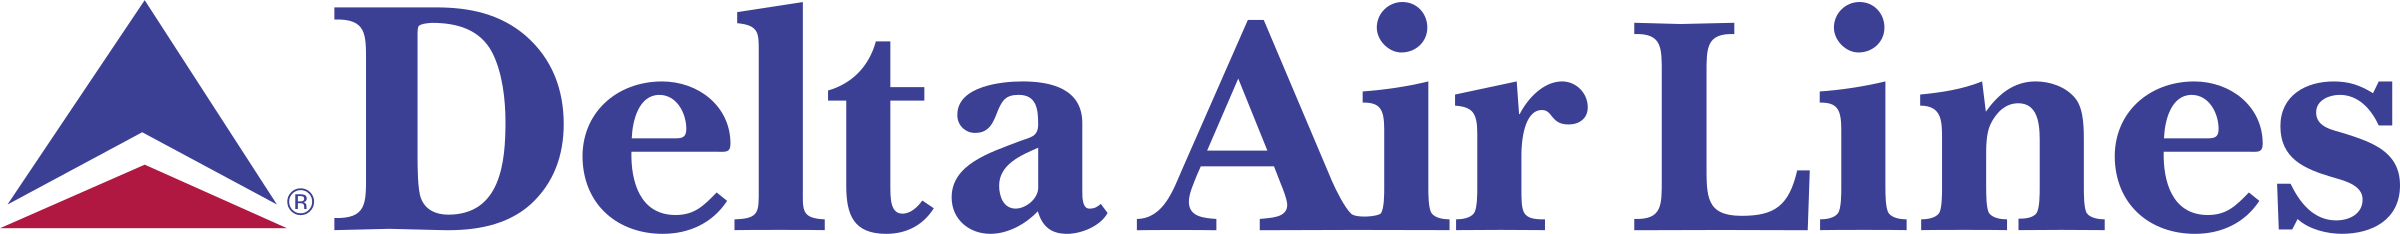 Delta Airlines Logo PNG - 177282